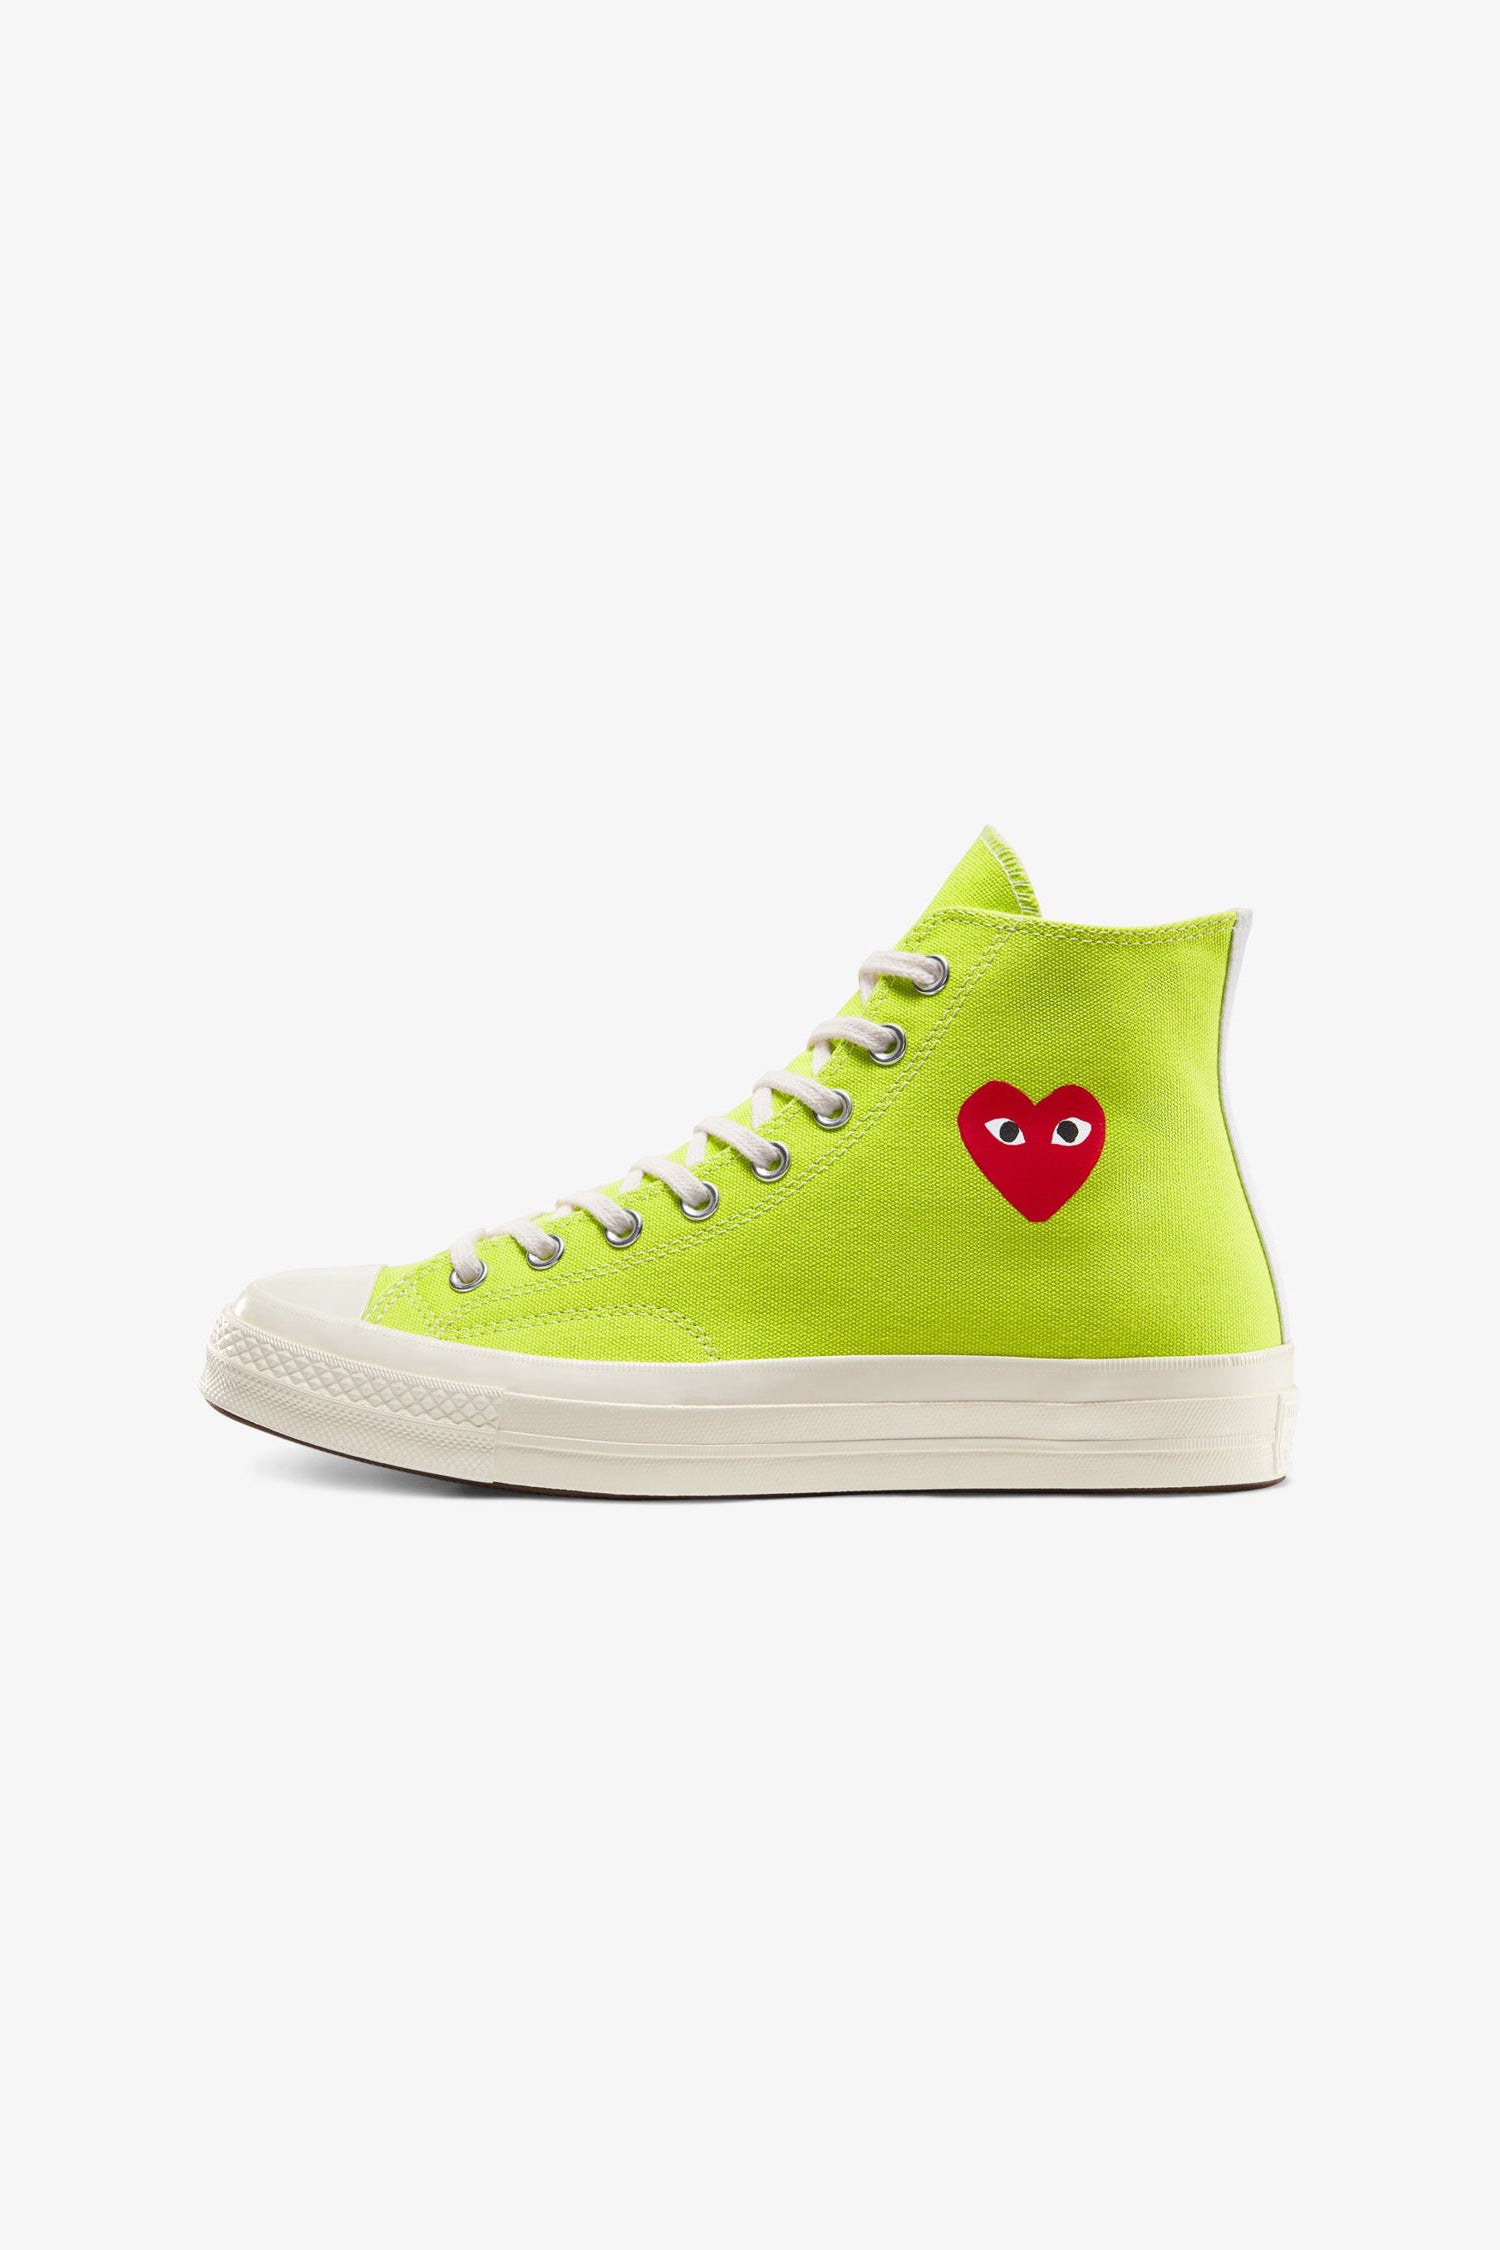 Selectshop FRAME - COMME DES GARCONS PLAY Comme des Garçons x Converse Chuck '70 High (Bright Green) Footwear Dubai